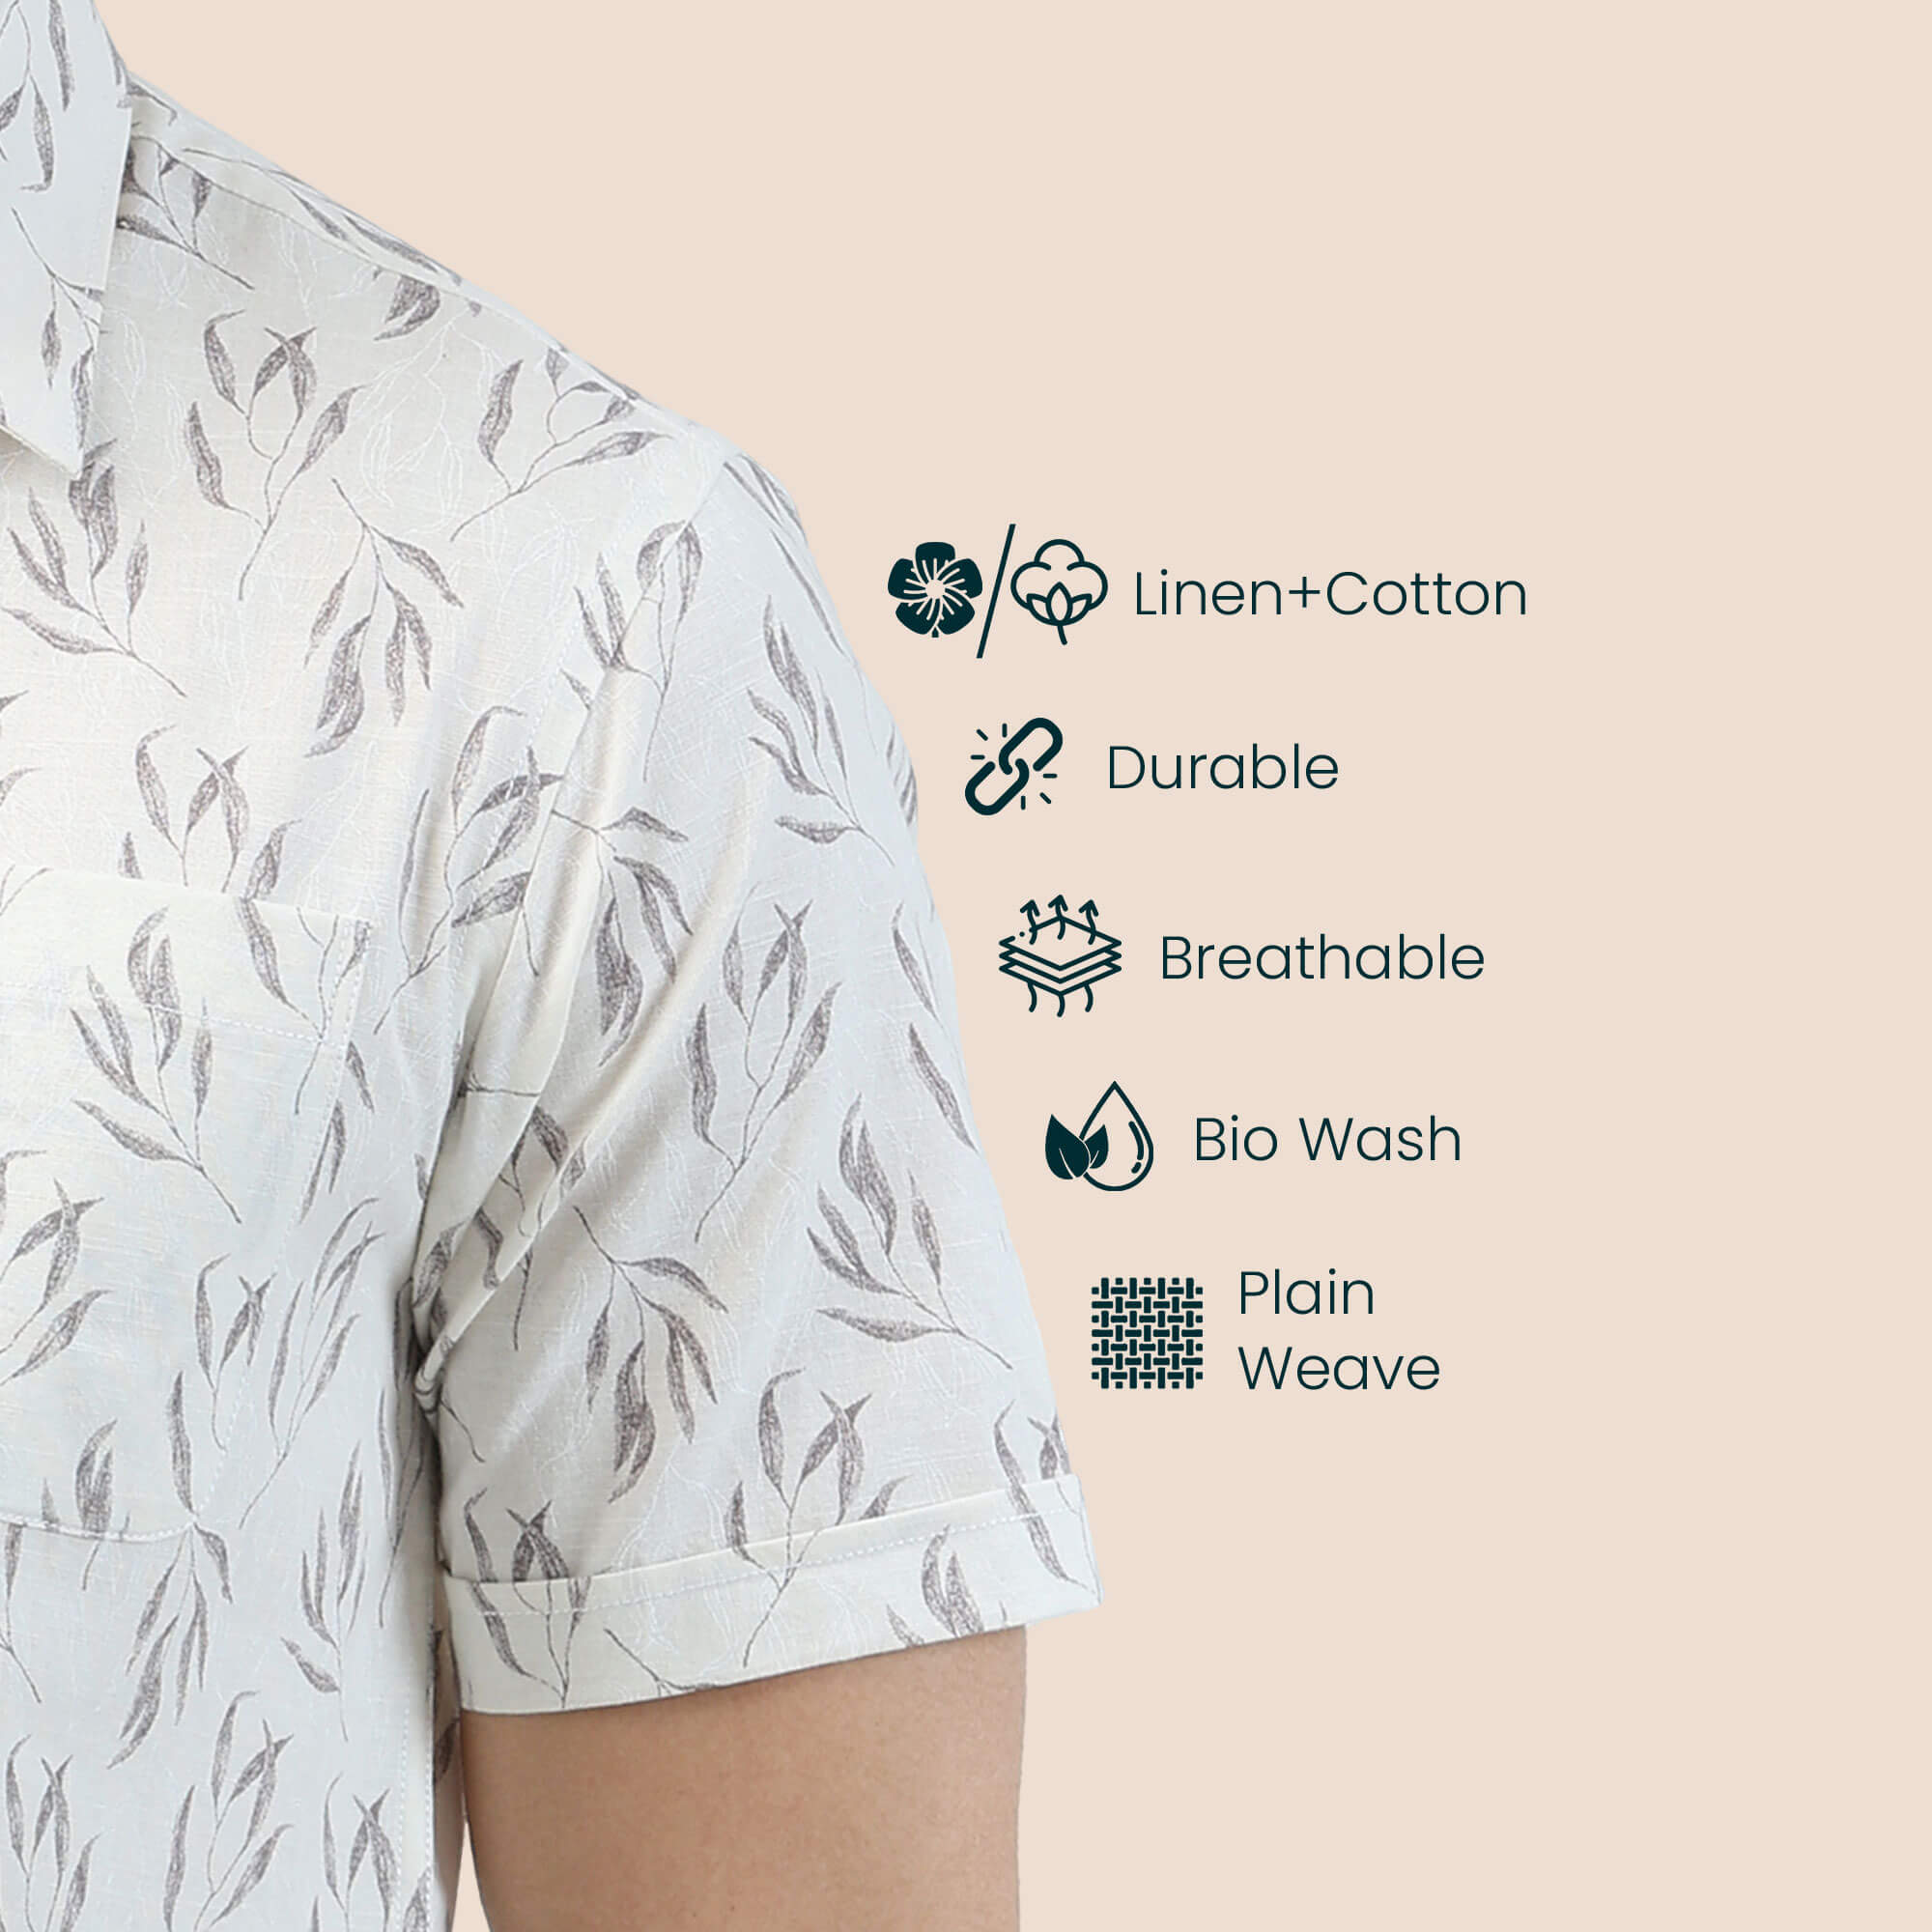 Breeze Linen Shirt In Grey Leaf Print